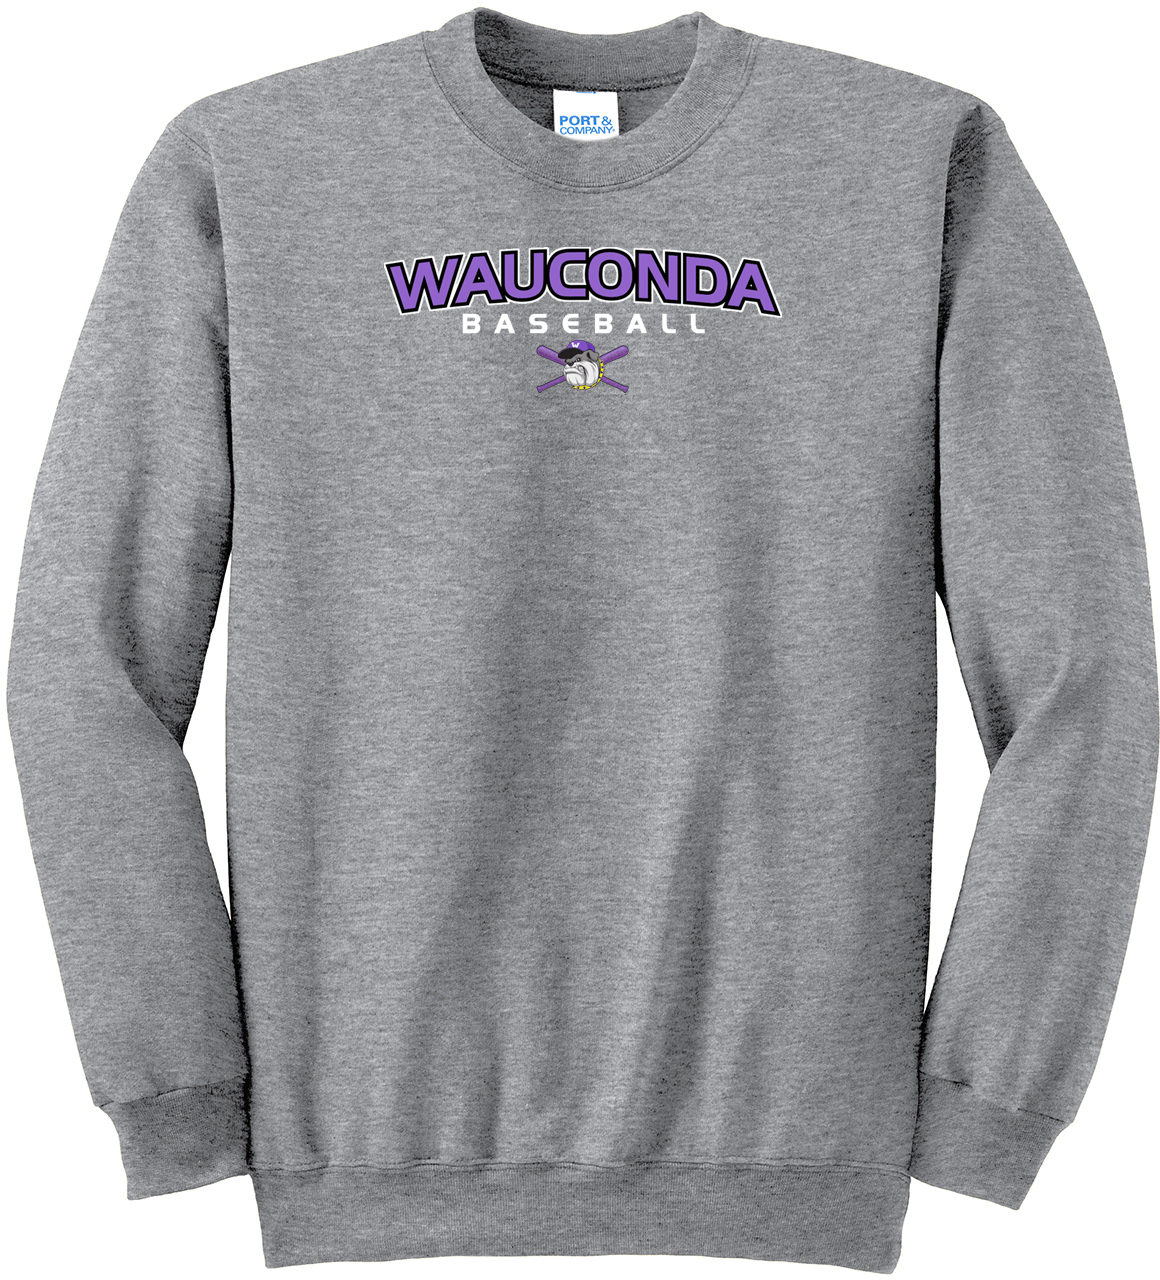 Wauconda Baseball Crew Neck Sweater